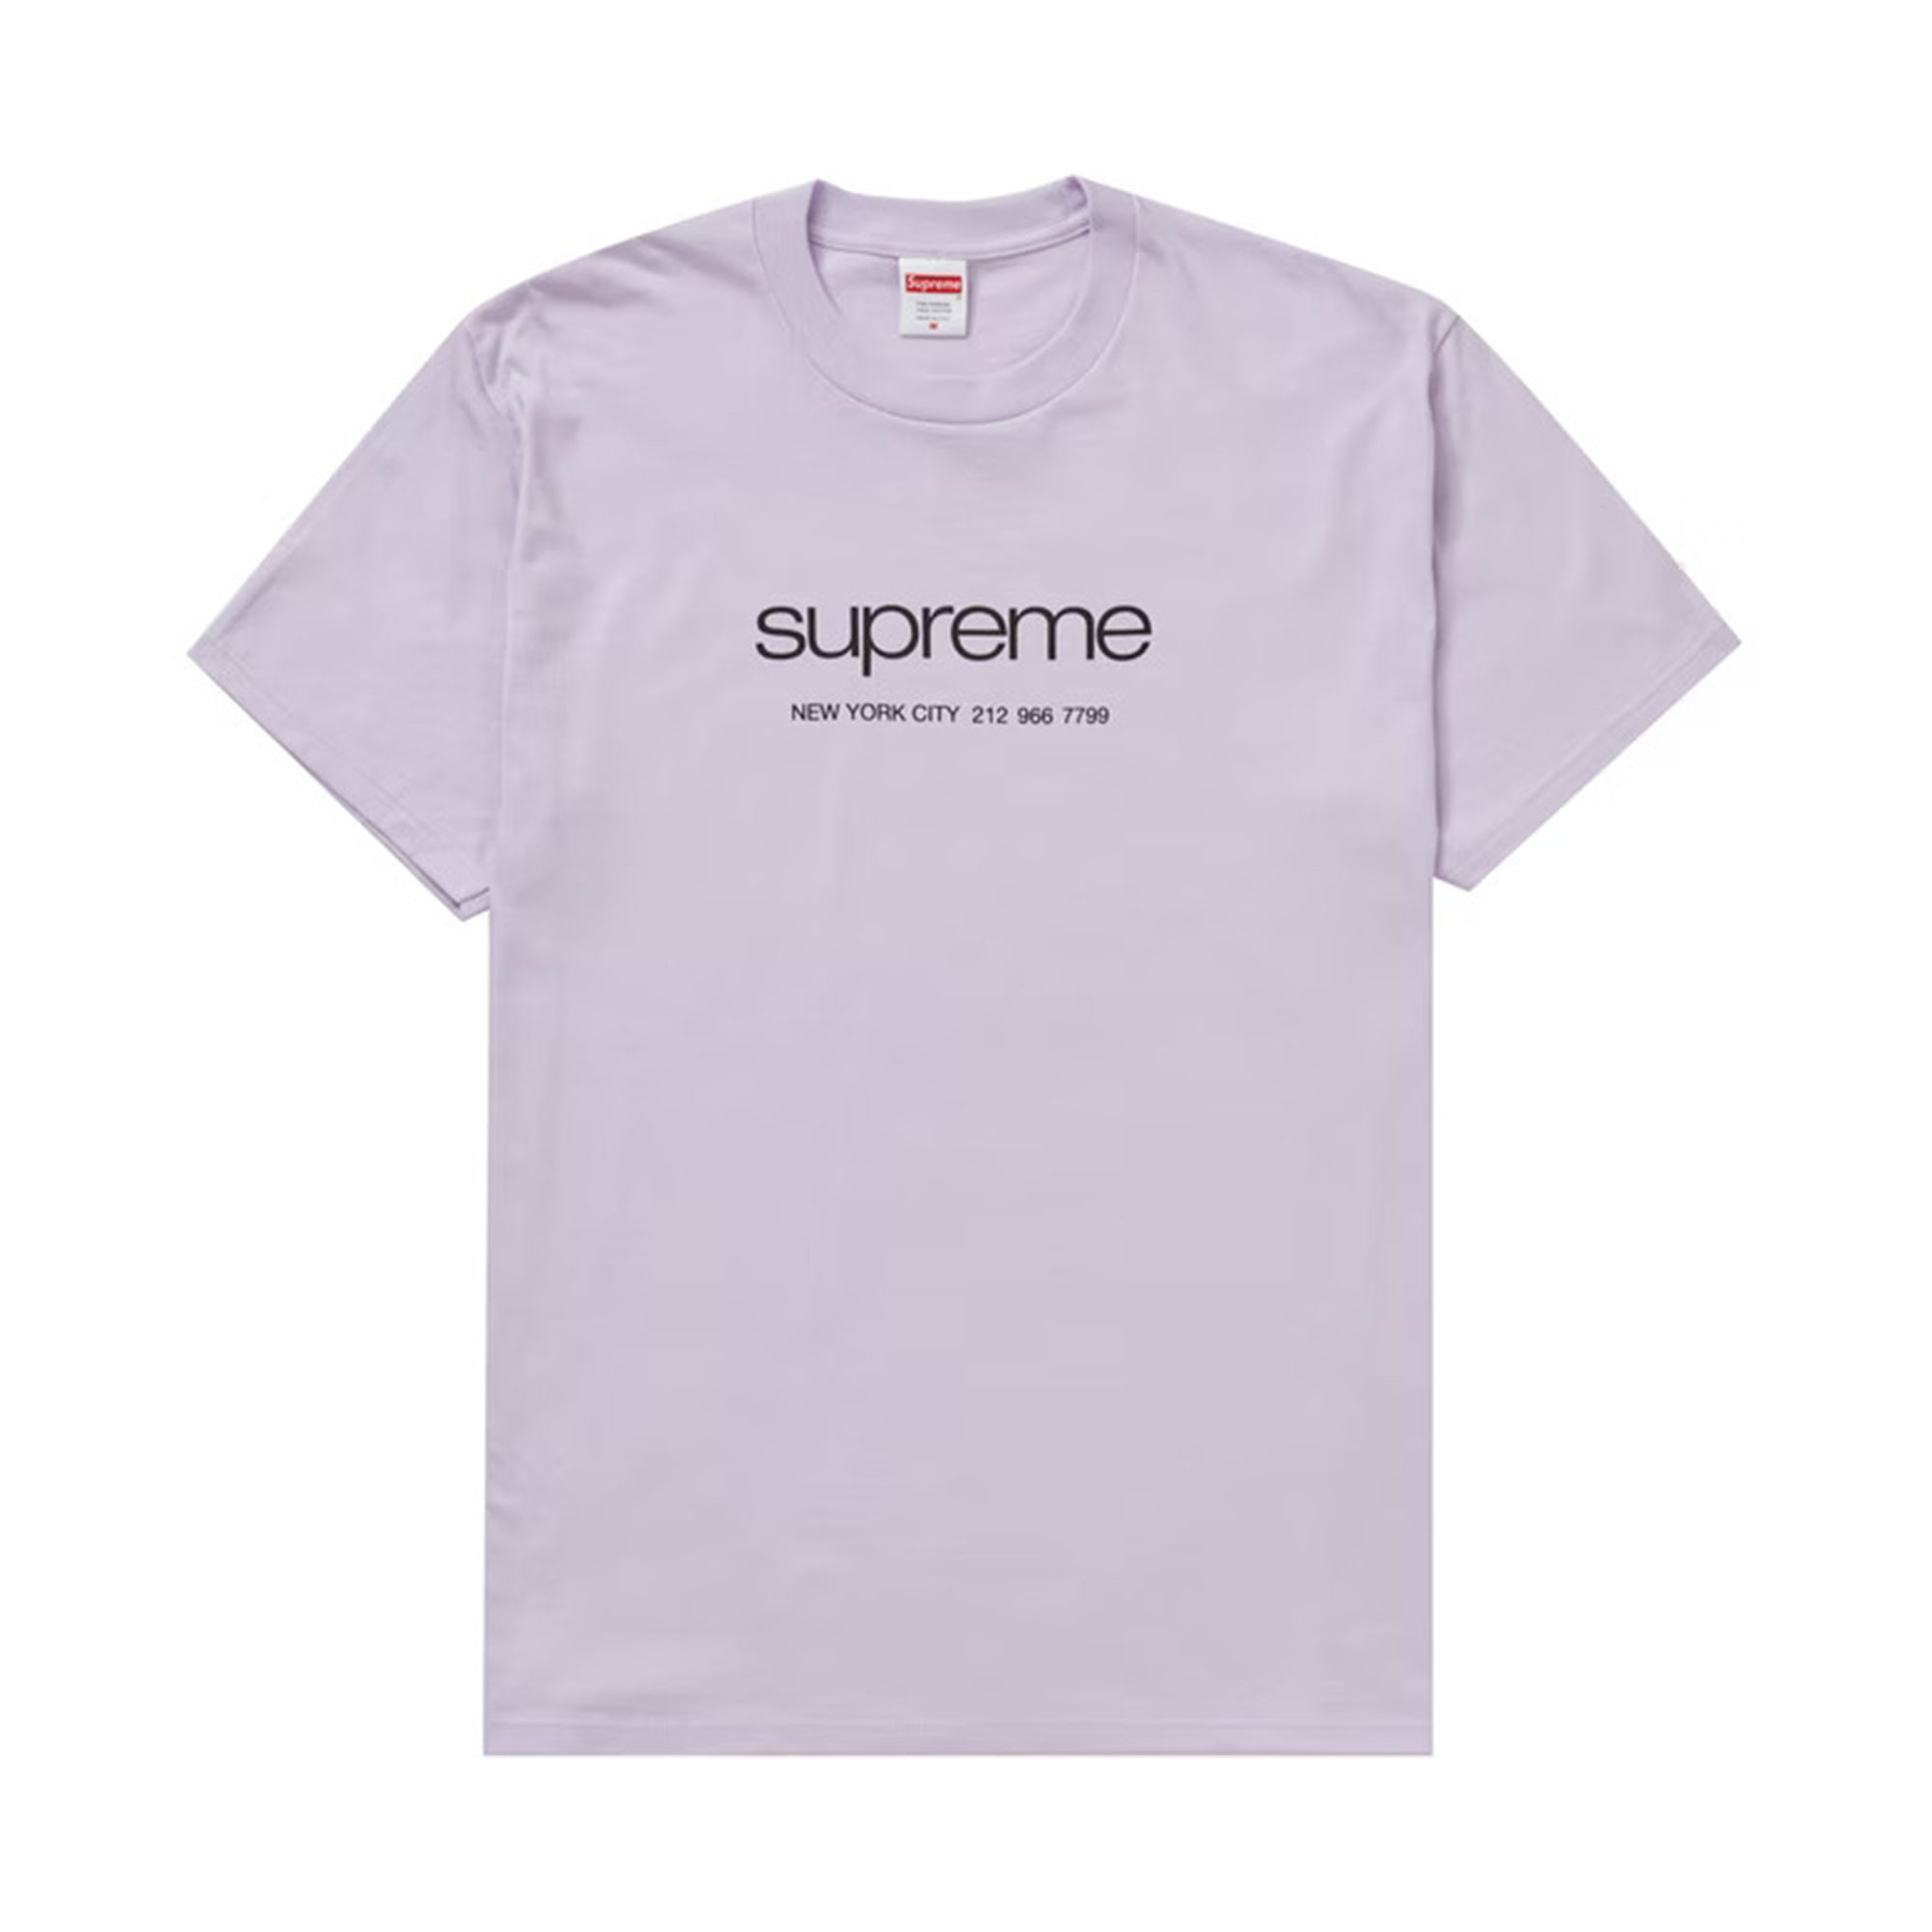 Supreme Shop Tee Light Purple-PLUS